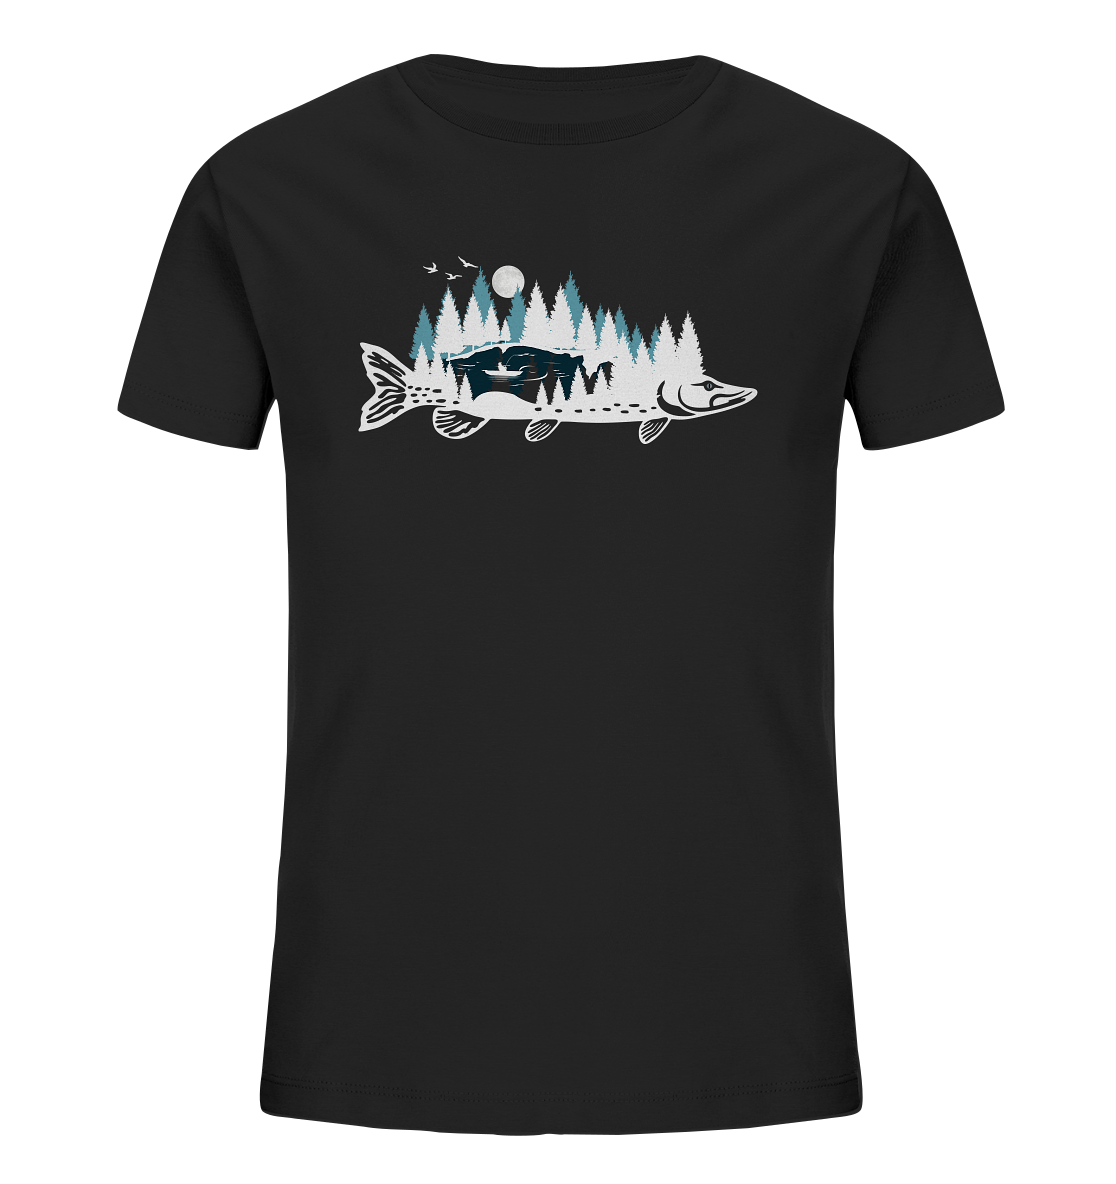 Pike Forest - Kinder Bio T-Shirt